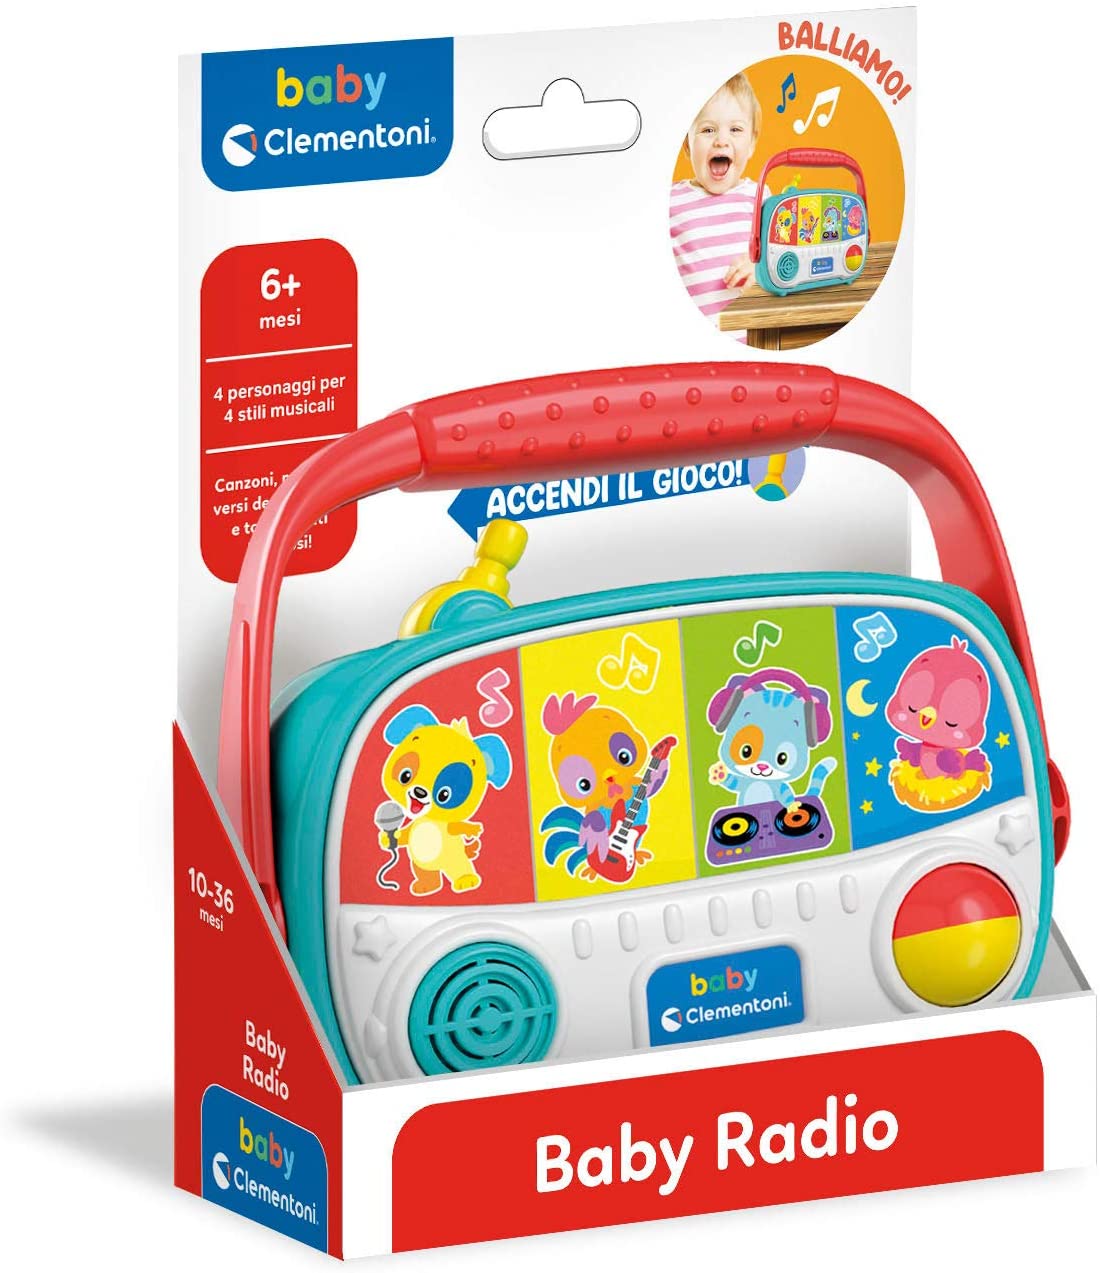 Baby Radio